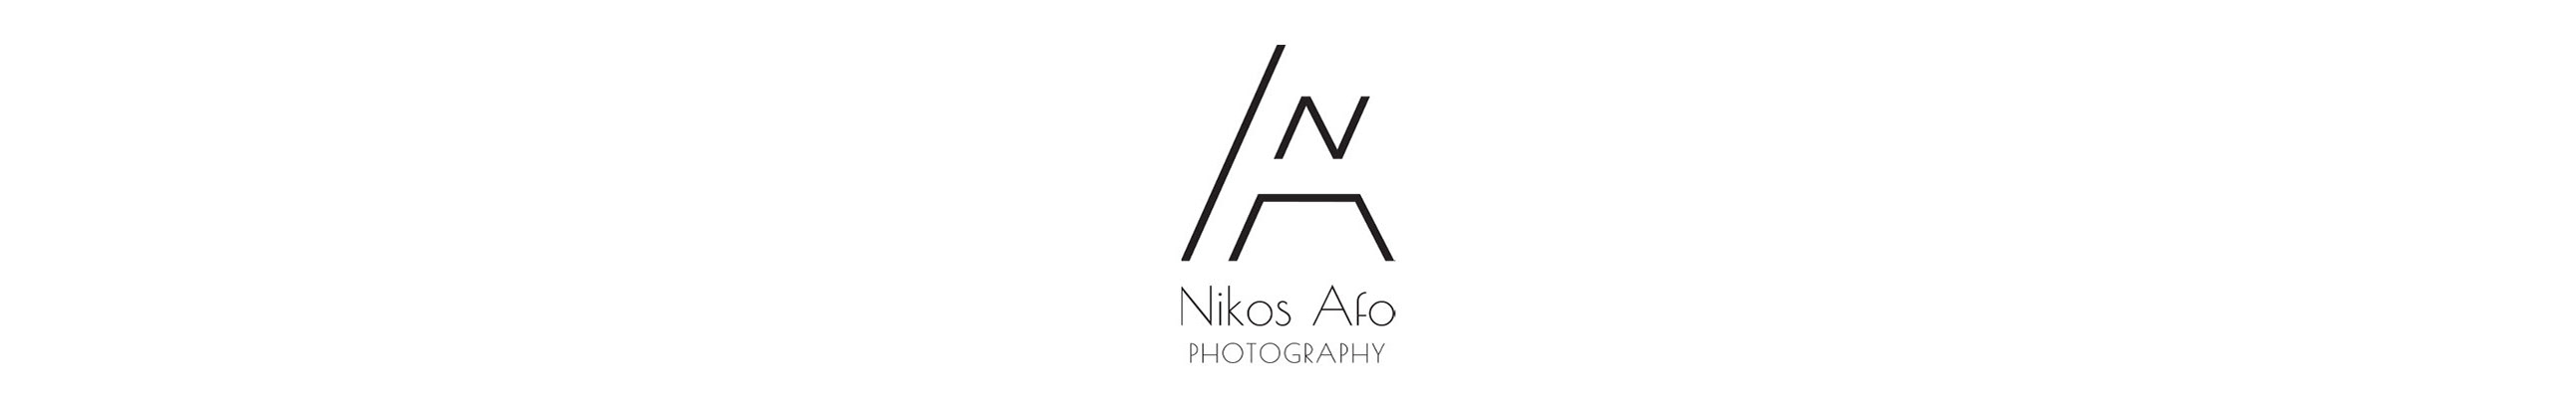 Banner de perfil de Nikos Afo